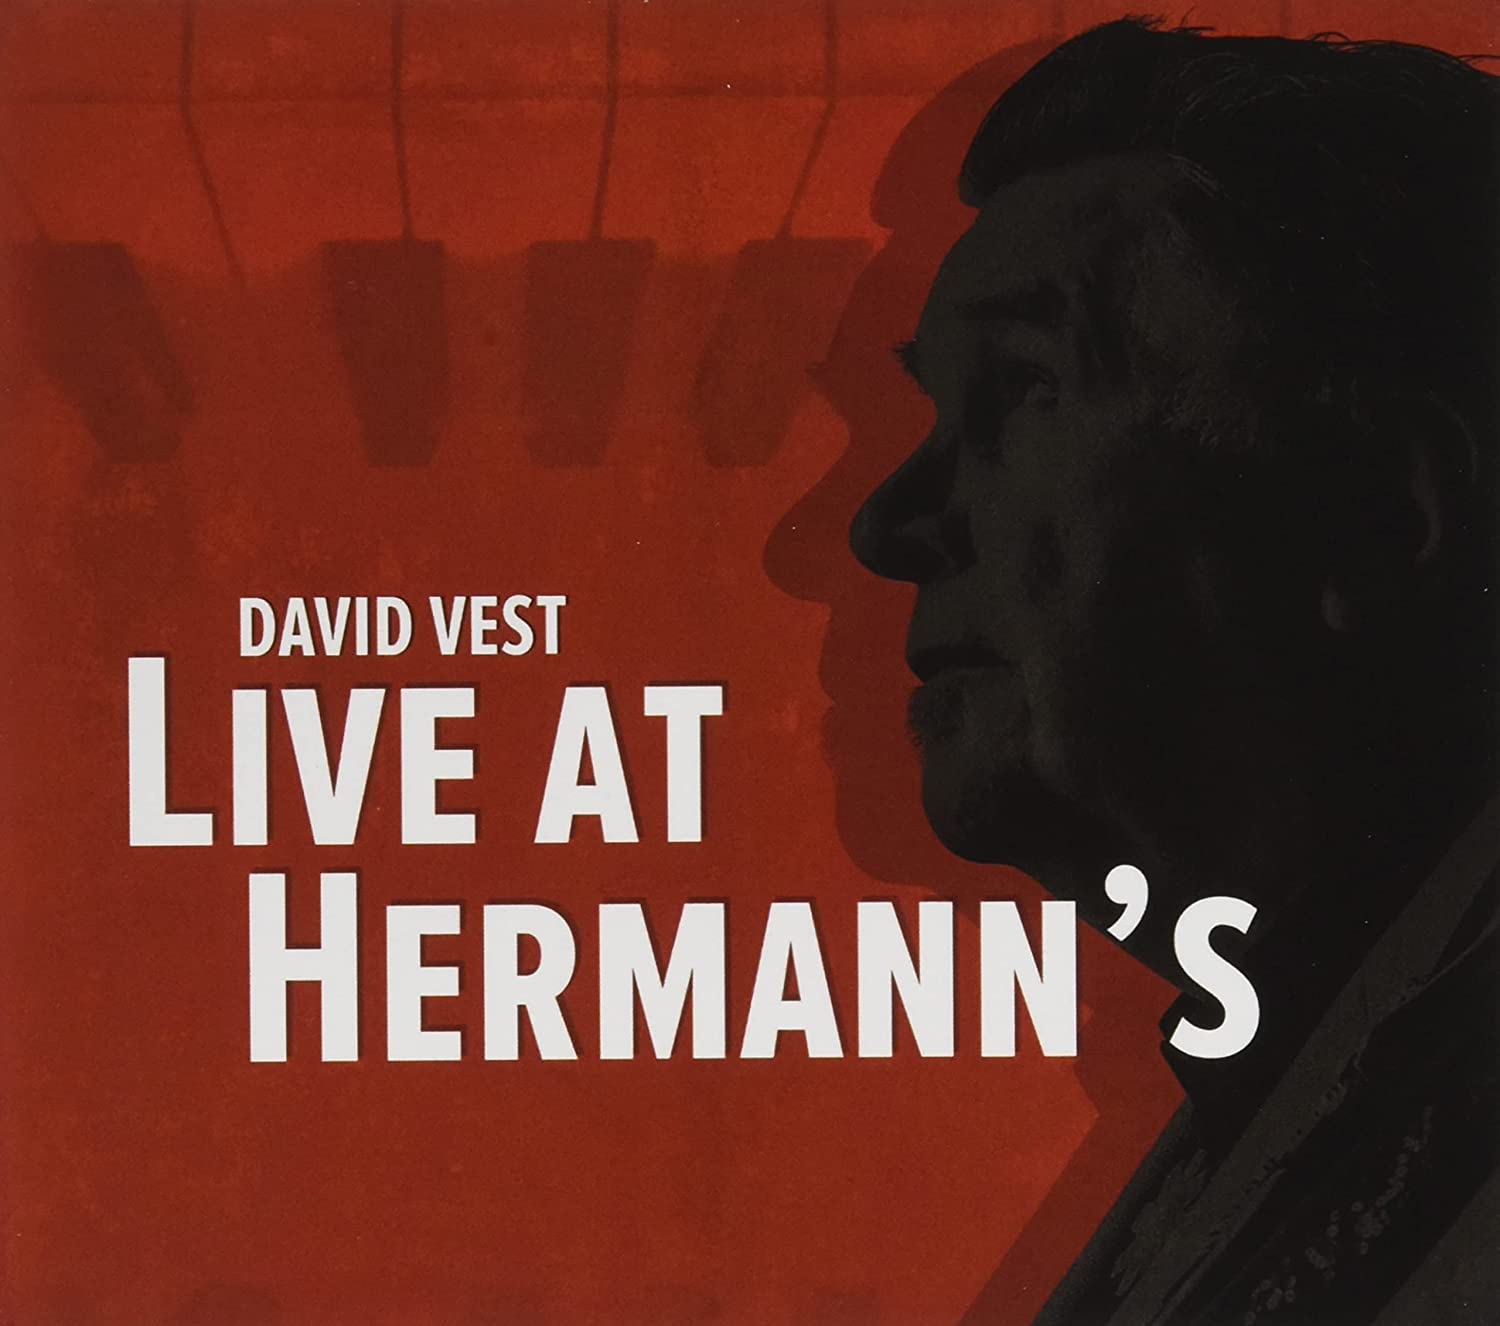 DAVID VEST - Live At Hermann's